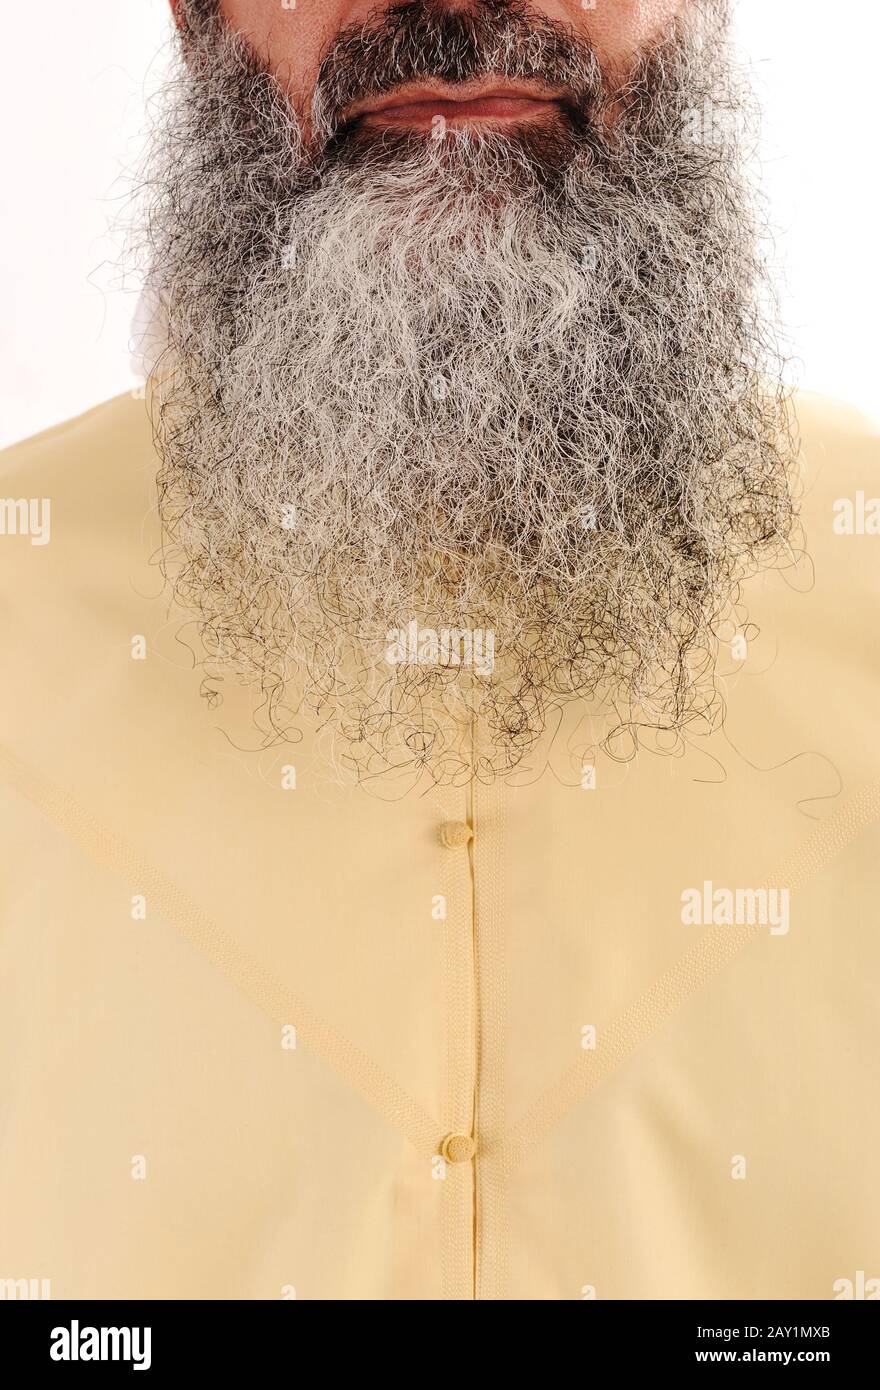 Long beard, facial hair - look as Osama bin Laden Stock Photo